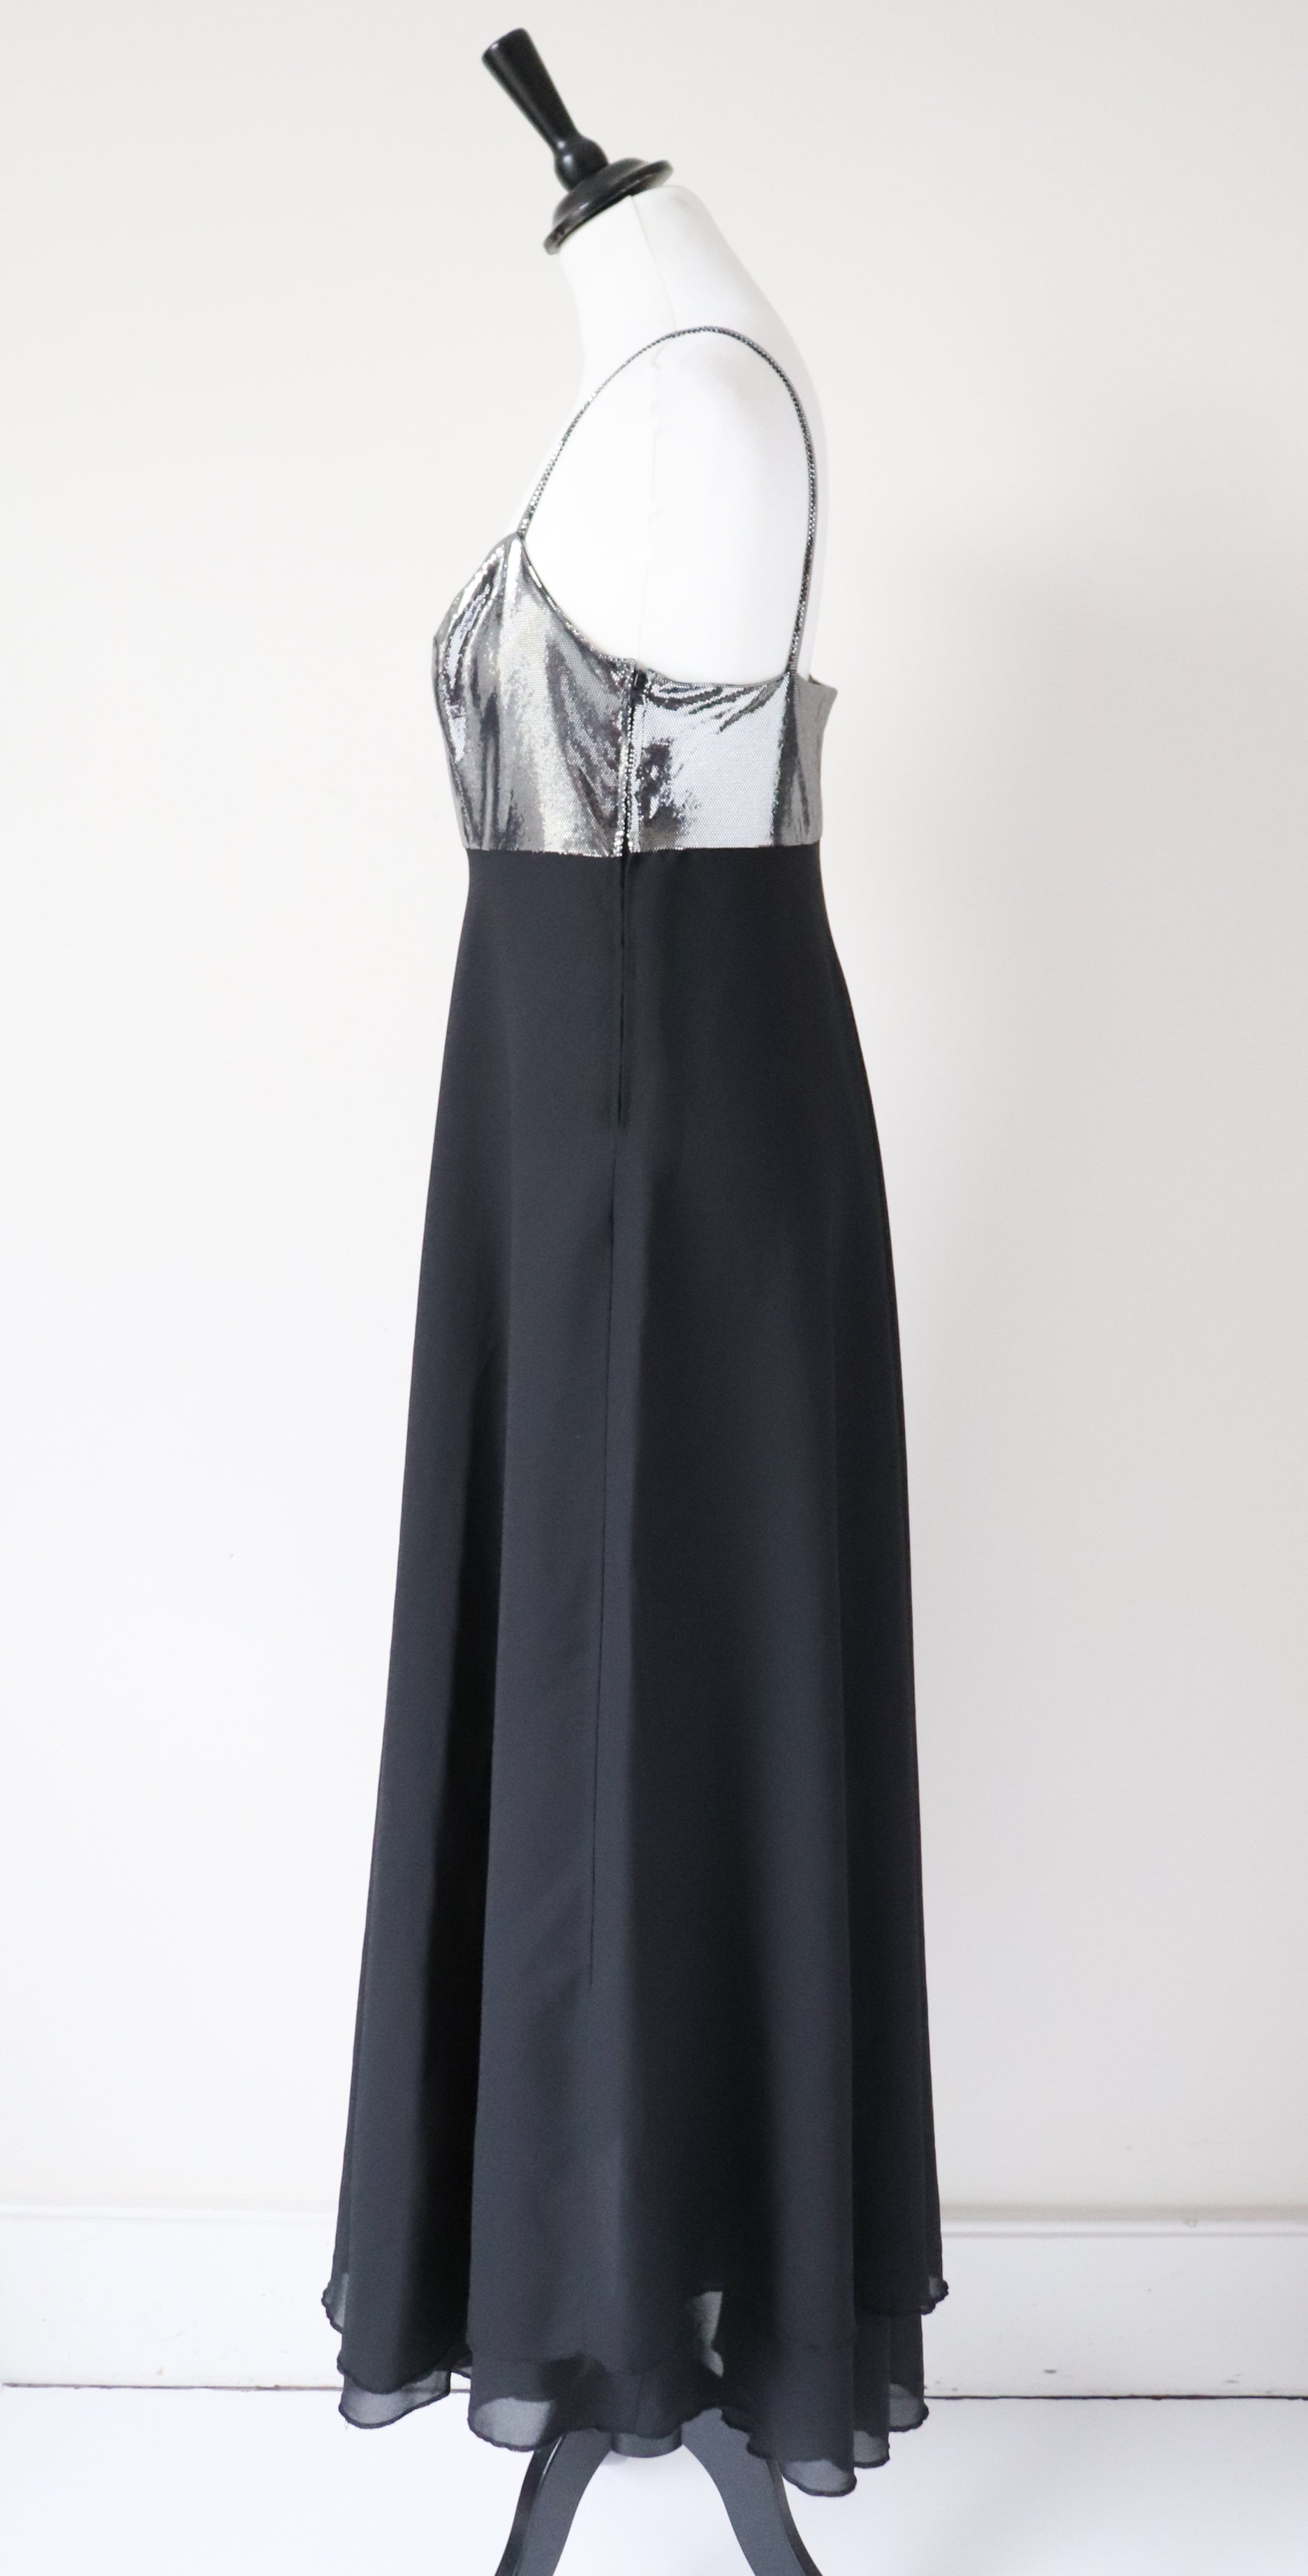 Strappy Black / Silver Evening Dress  - Long / Maxi - 1980s- Empire Waist - M / UK 12